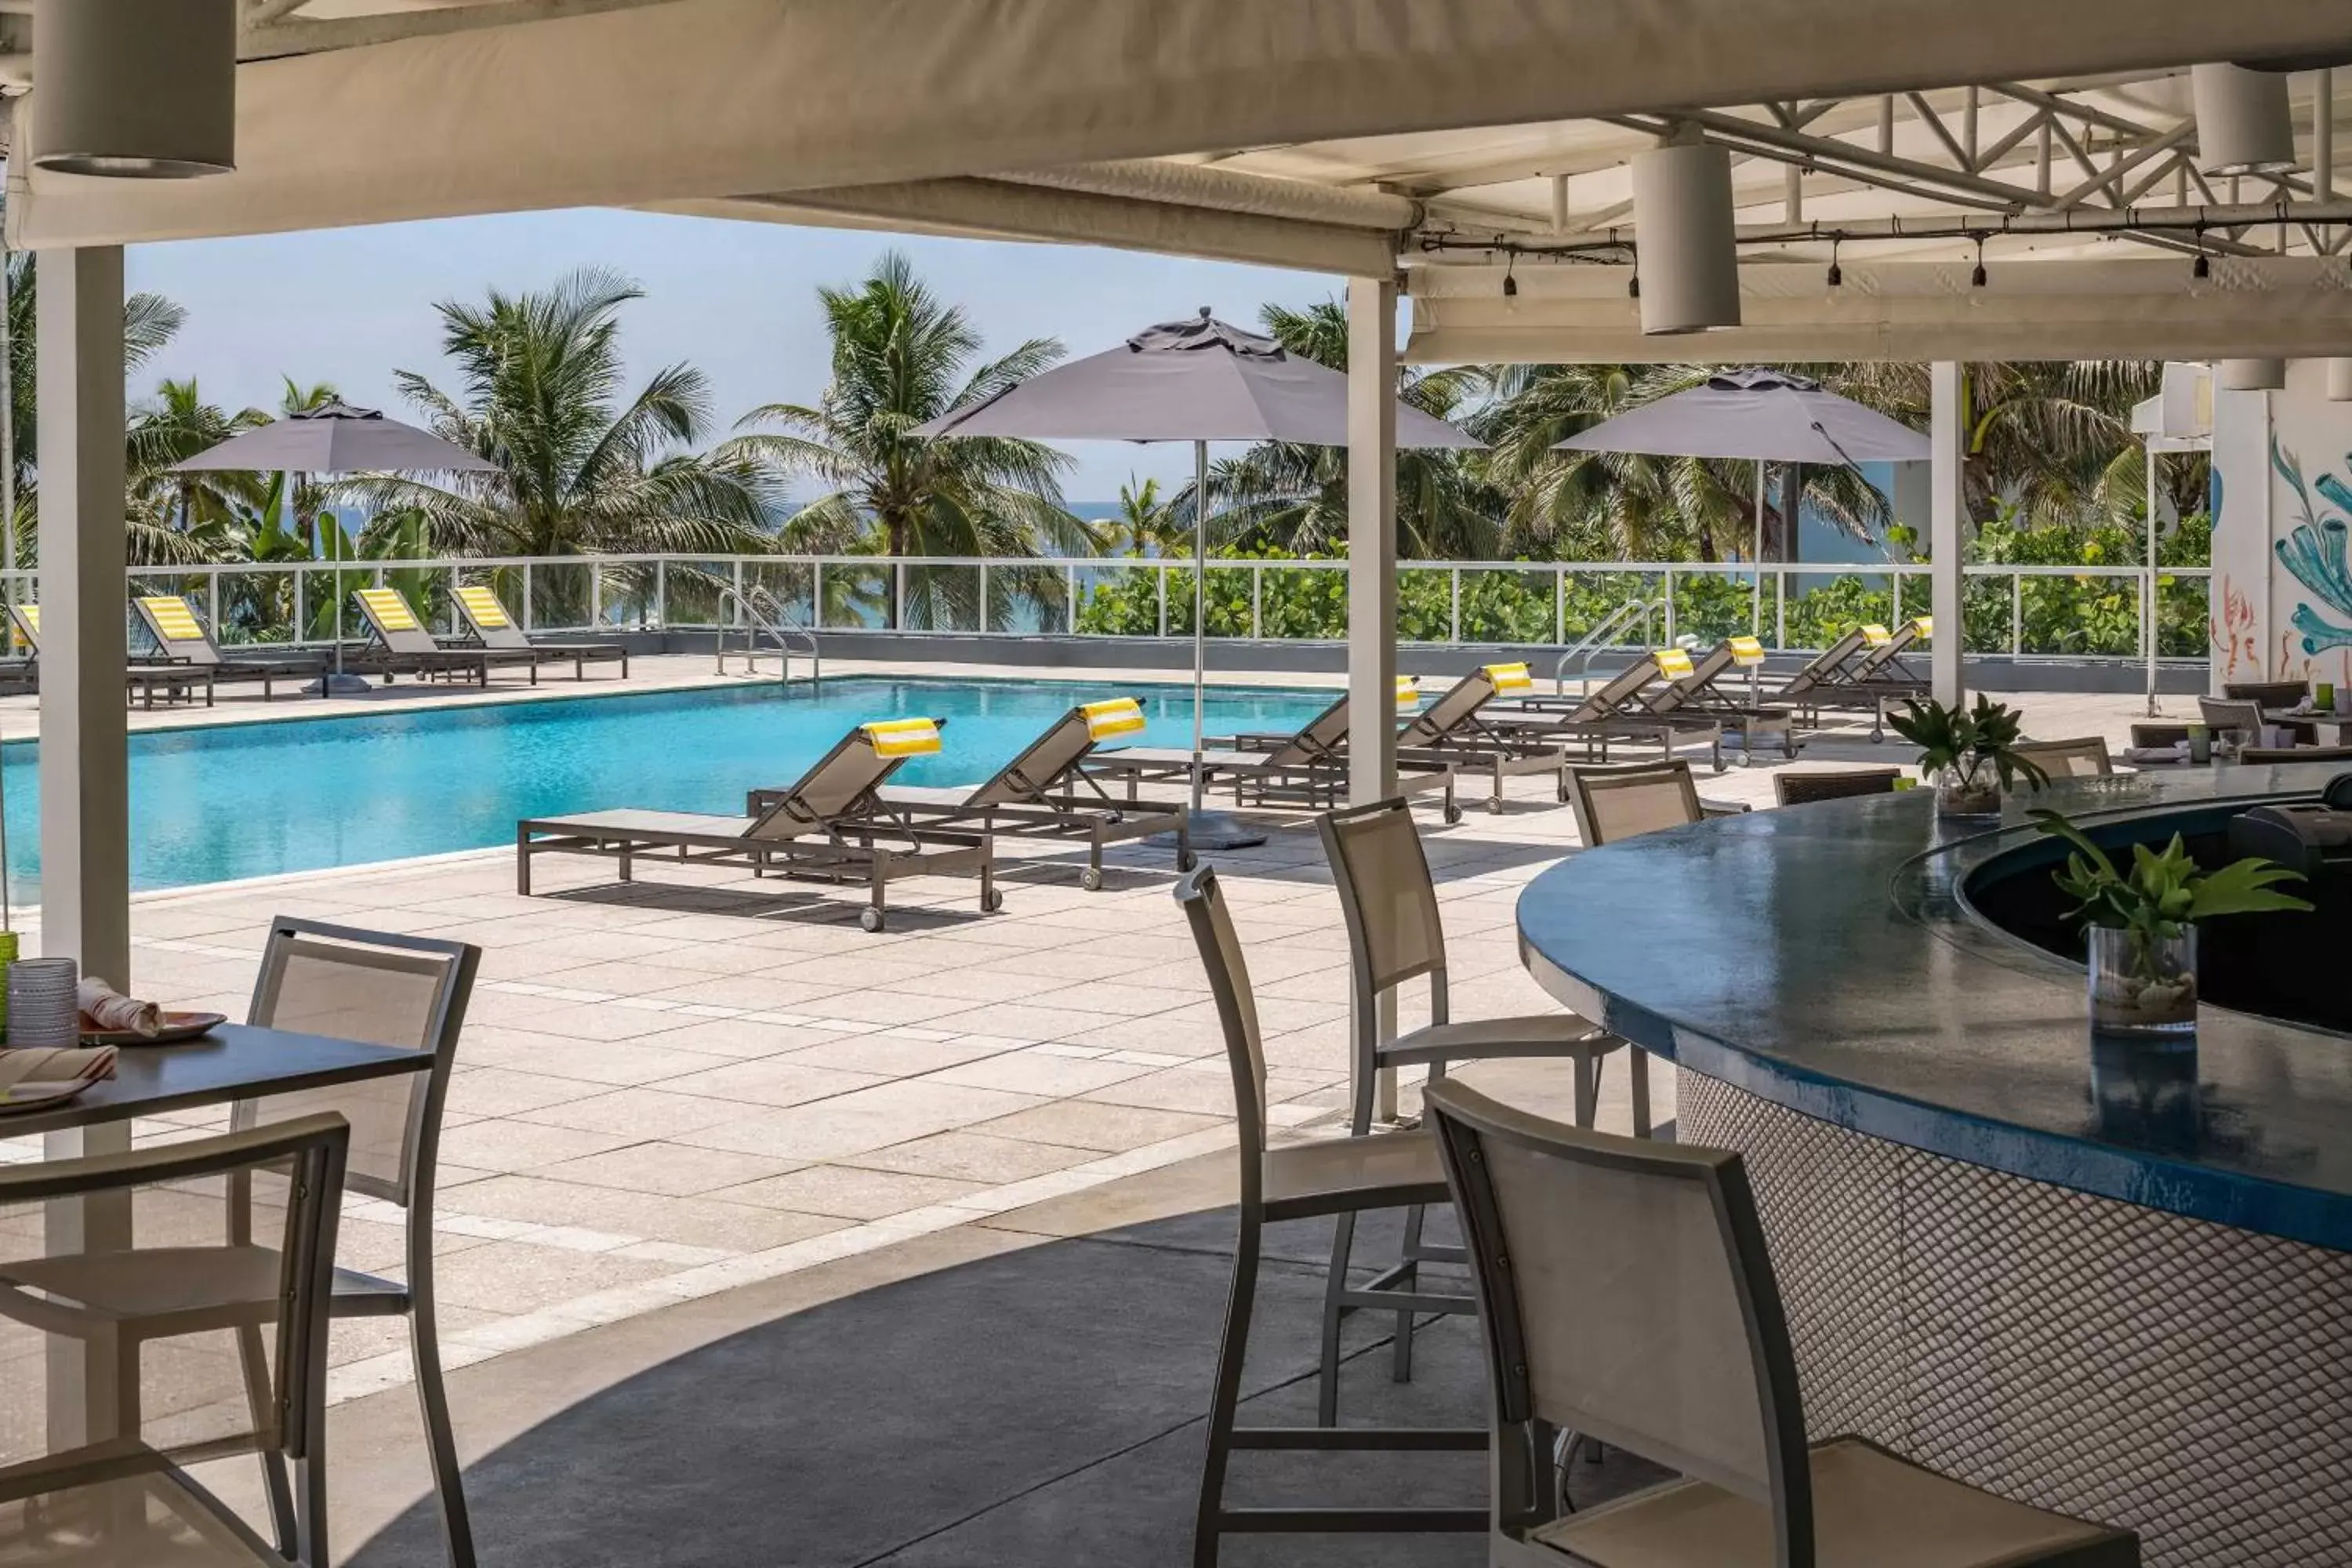 Swimming Pool in The Westin Fort Lauderdale Beach Resort